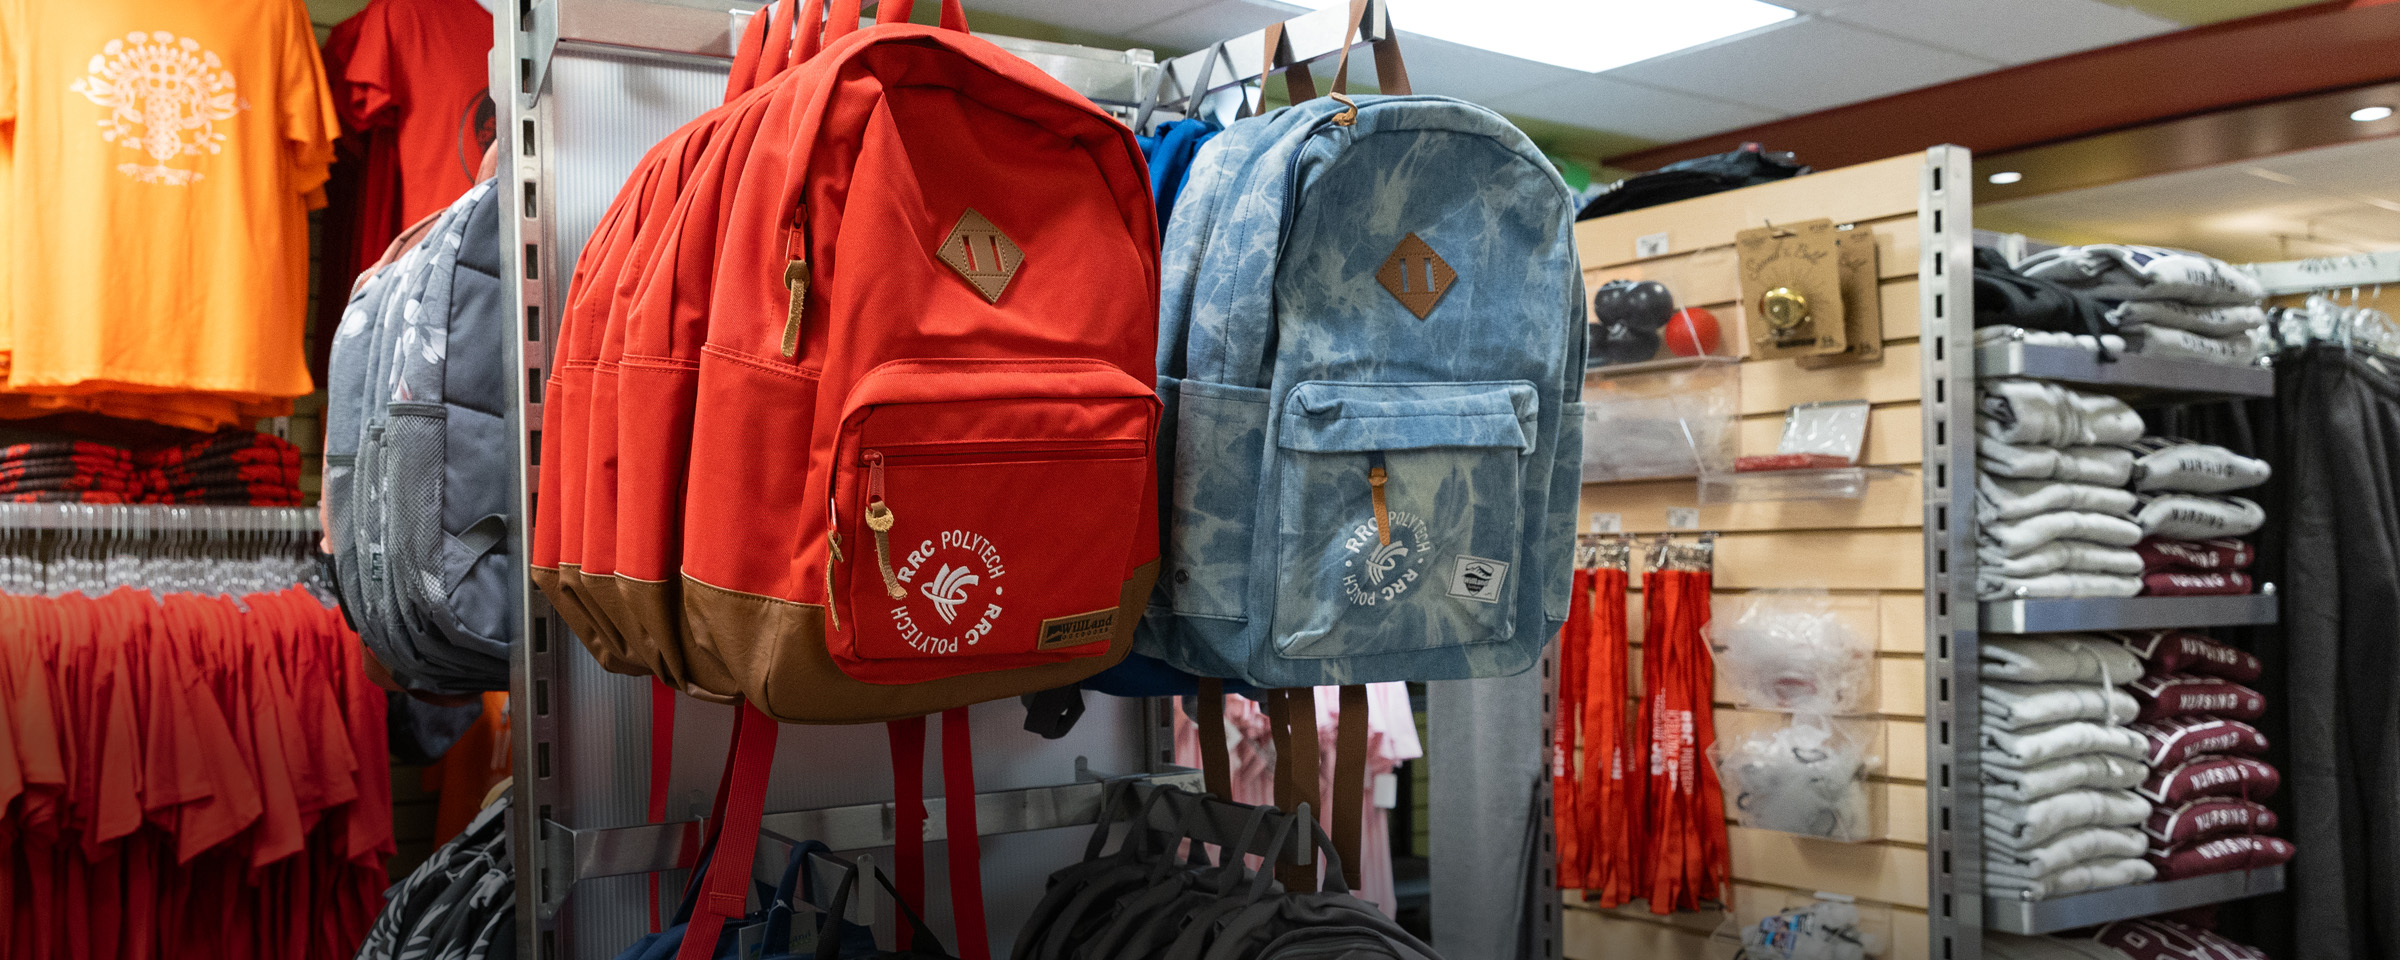 RRC Polytech backpacks on a store shelf